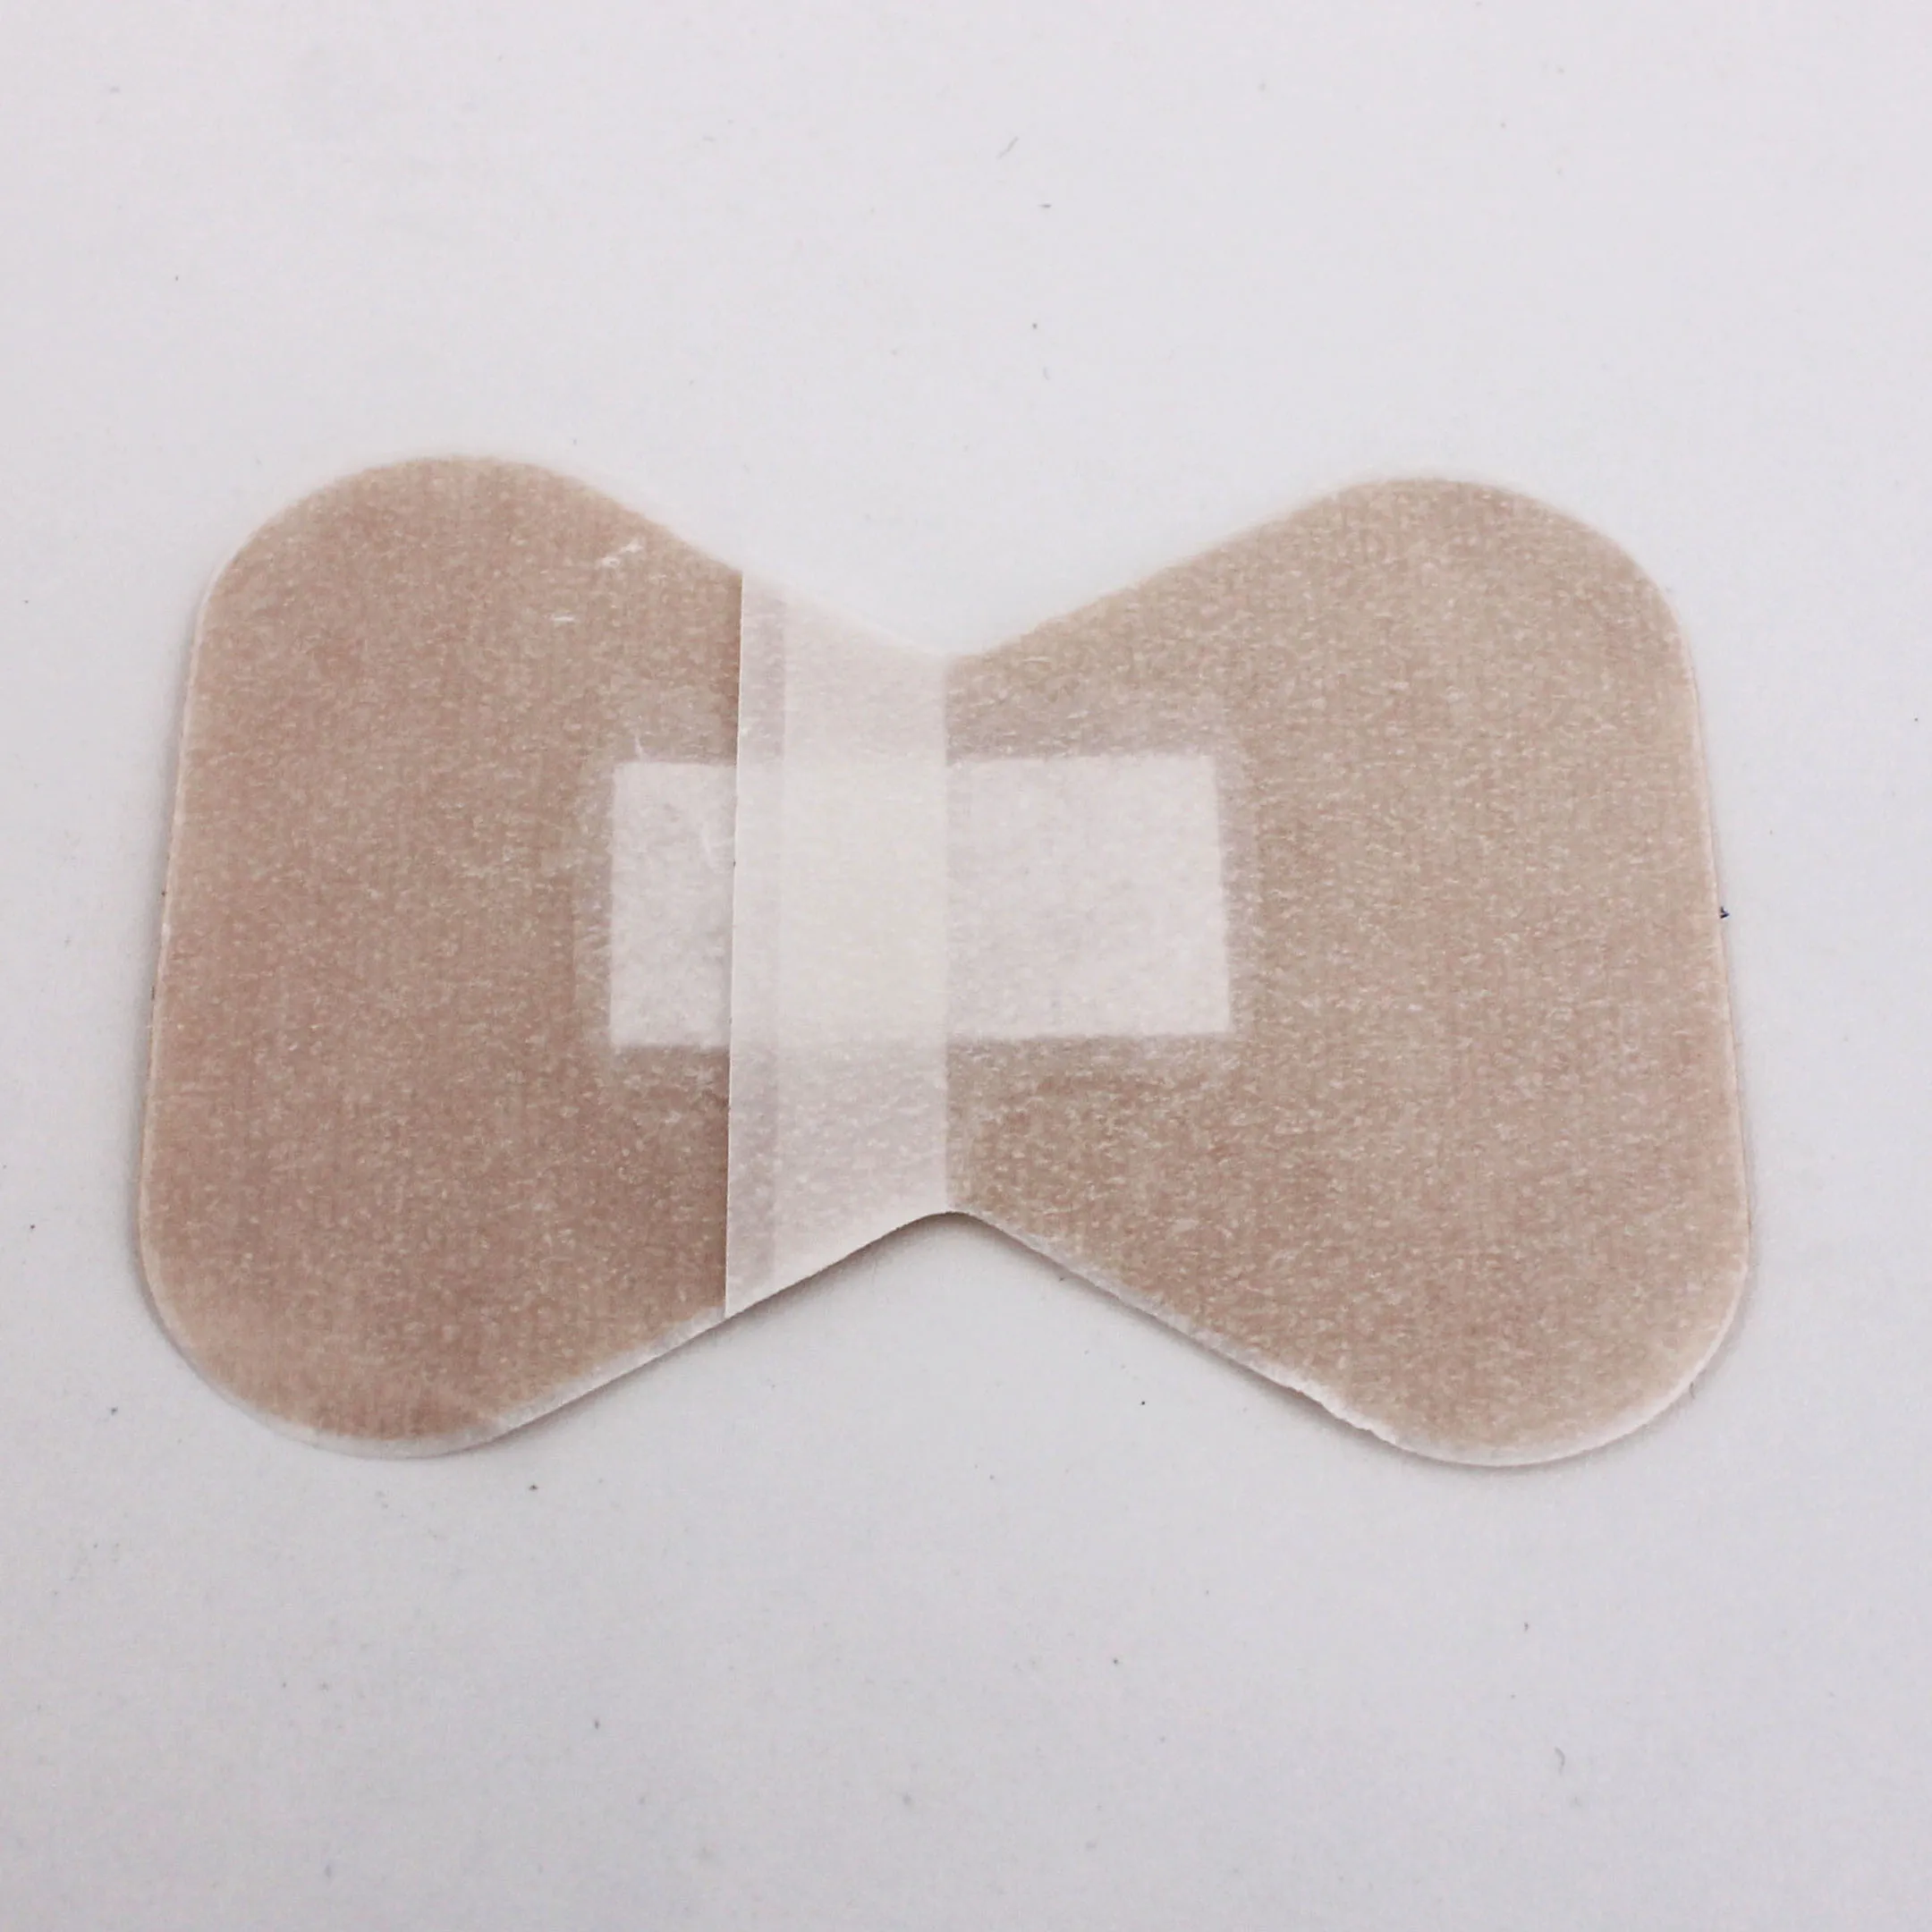 Hemostatic Custom Printed Band Aid First Aid Bandage